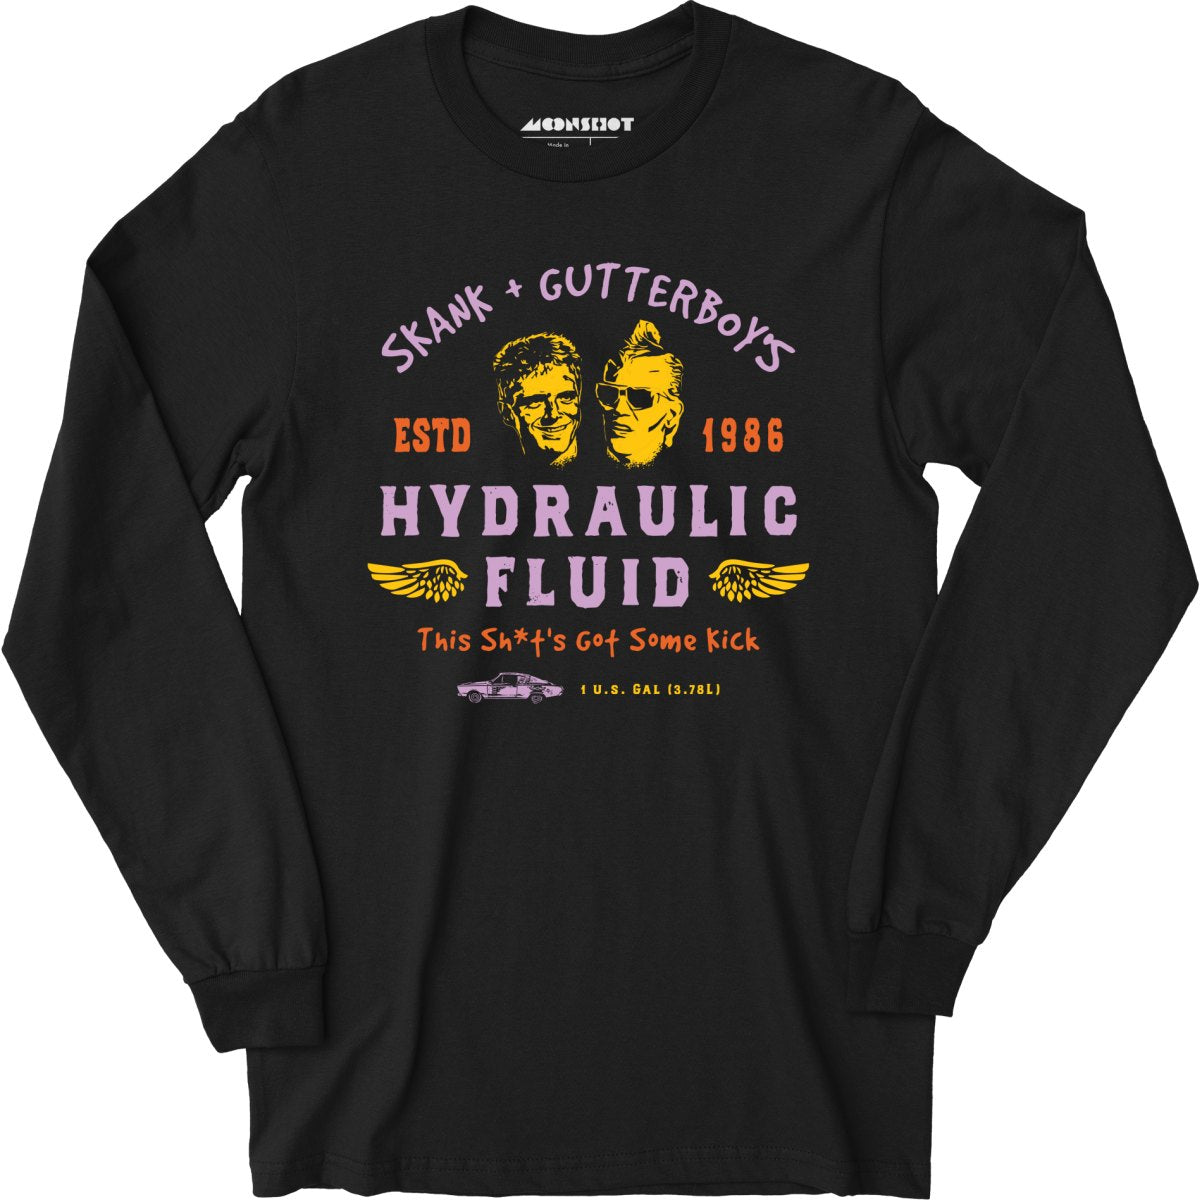 The Wraith - Skank & Gutterboy's Hydraulic Fluid - Long Sleeve T-Shirt